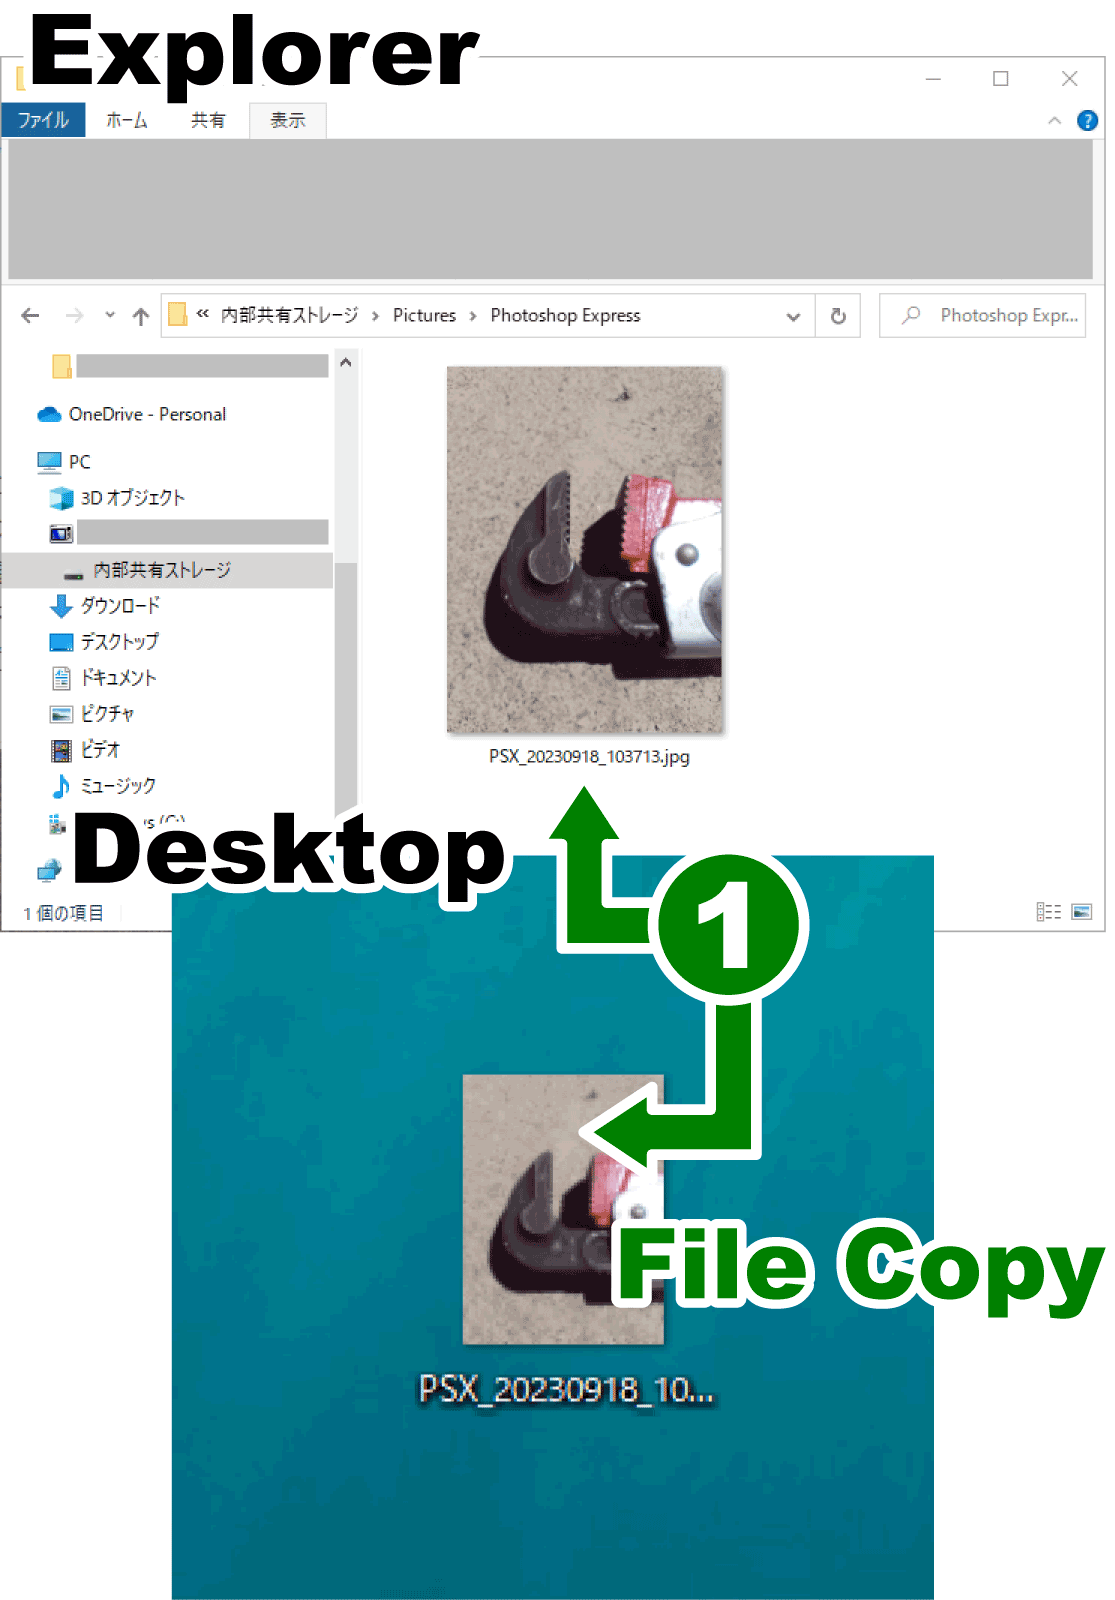 「Adobe Photoshop Express」アプリで保存した写真をデスクトップにコピー。